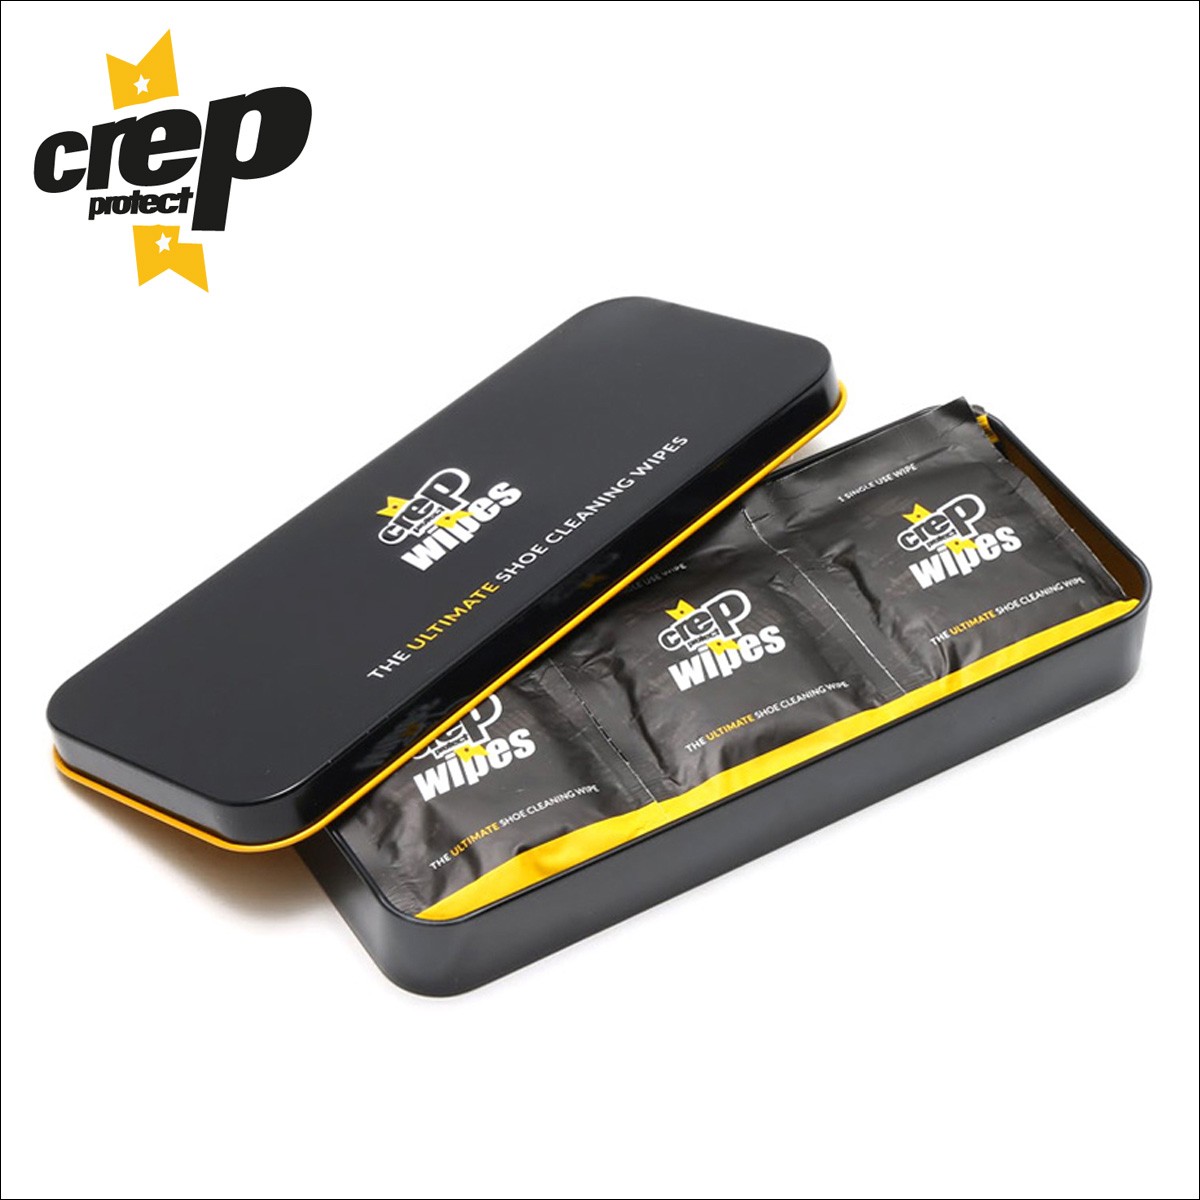 CREP PROTECT クレップ プロテクト ペーパークリーナー シューケア 12枚入り シューズケア用品 6065-2903